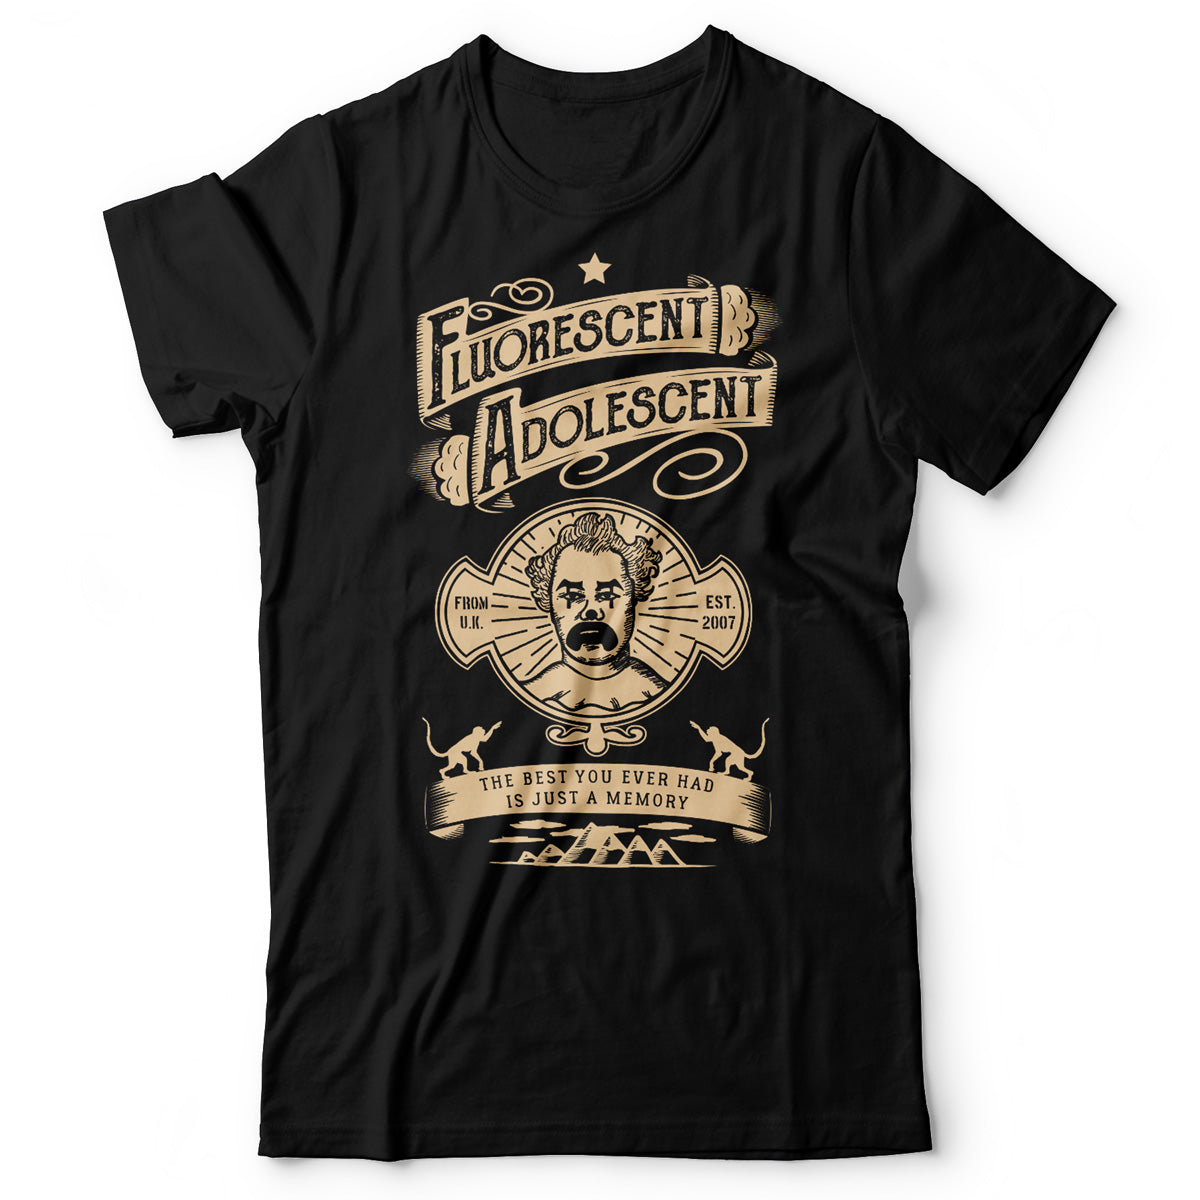 Arctic Monkeys - Fluorescent Adolescent - Men's T-Shirt Black